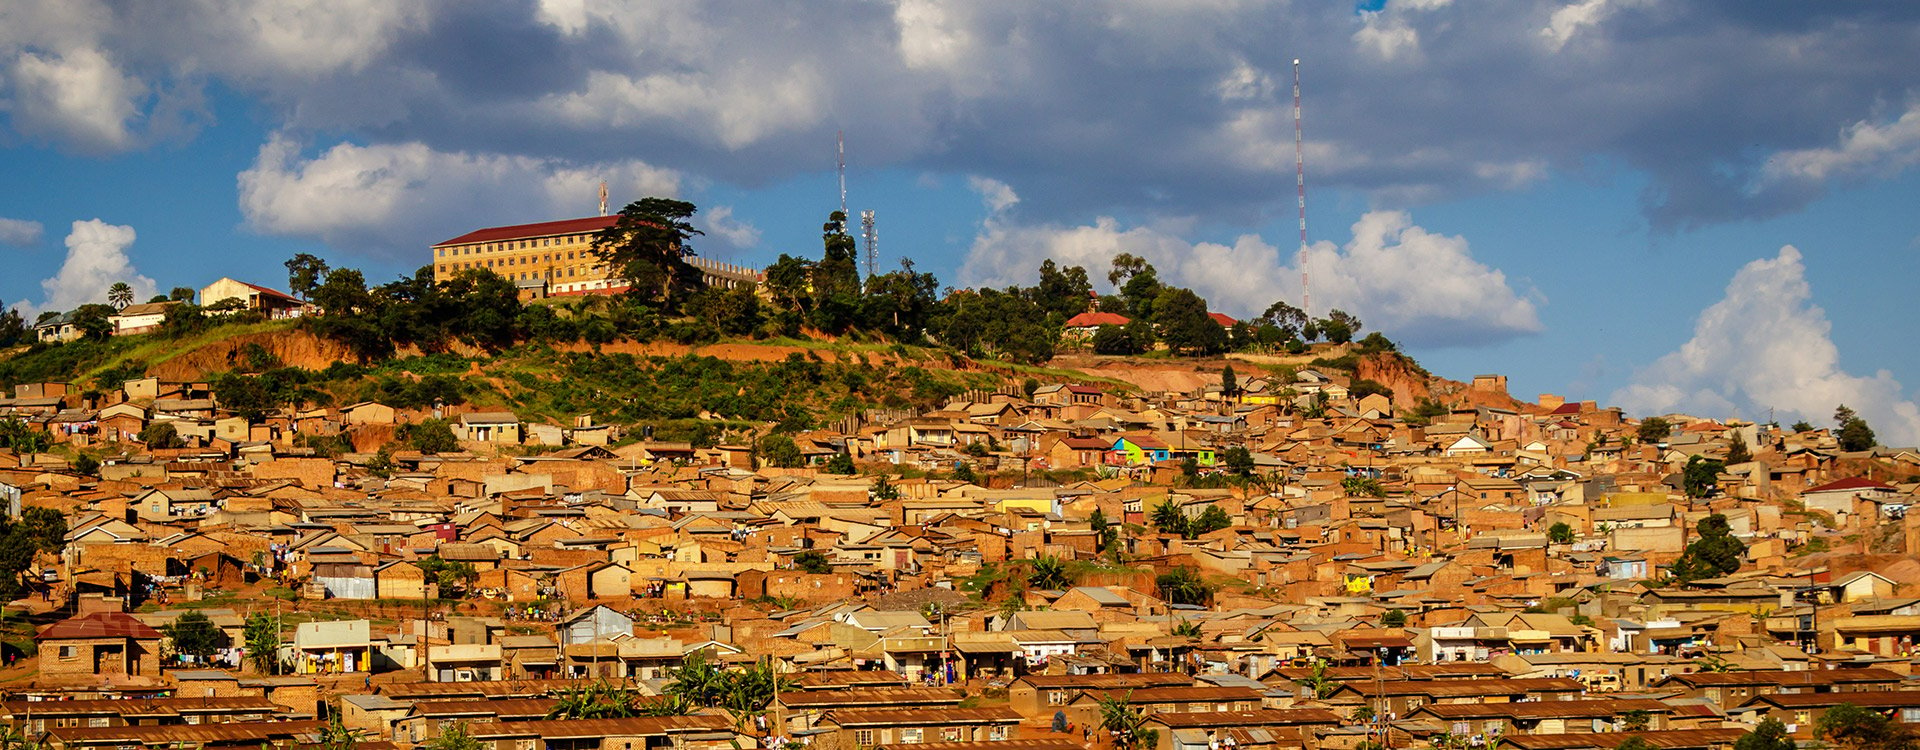 Uganda_Kampala City